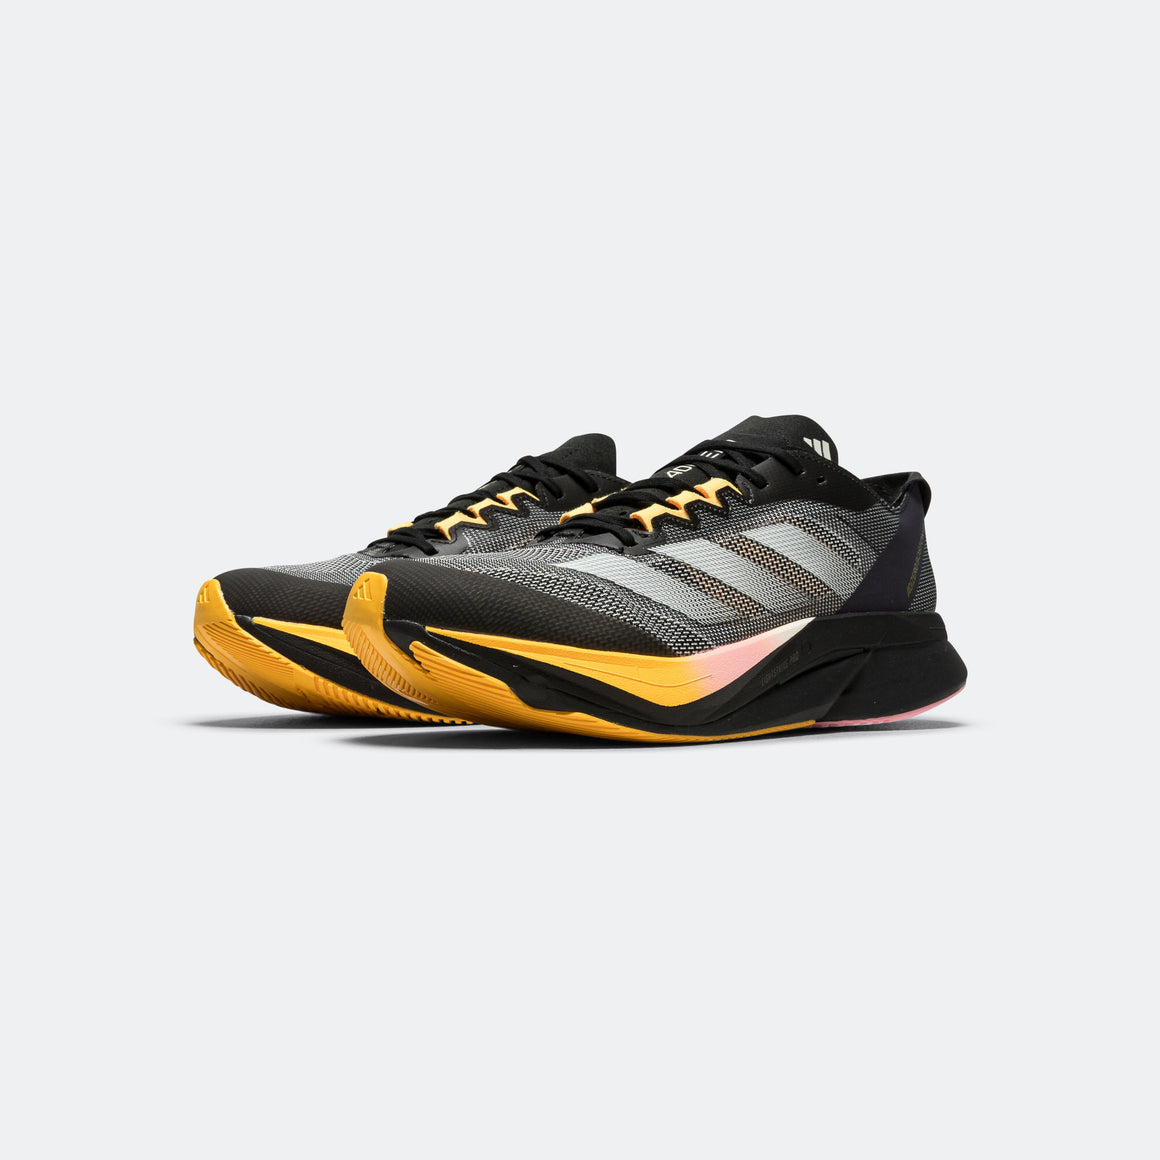 adidas - Mens Adizero Boston 12 - Core Black/Footwear White-Carbon - Up There Athletics